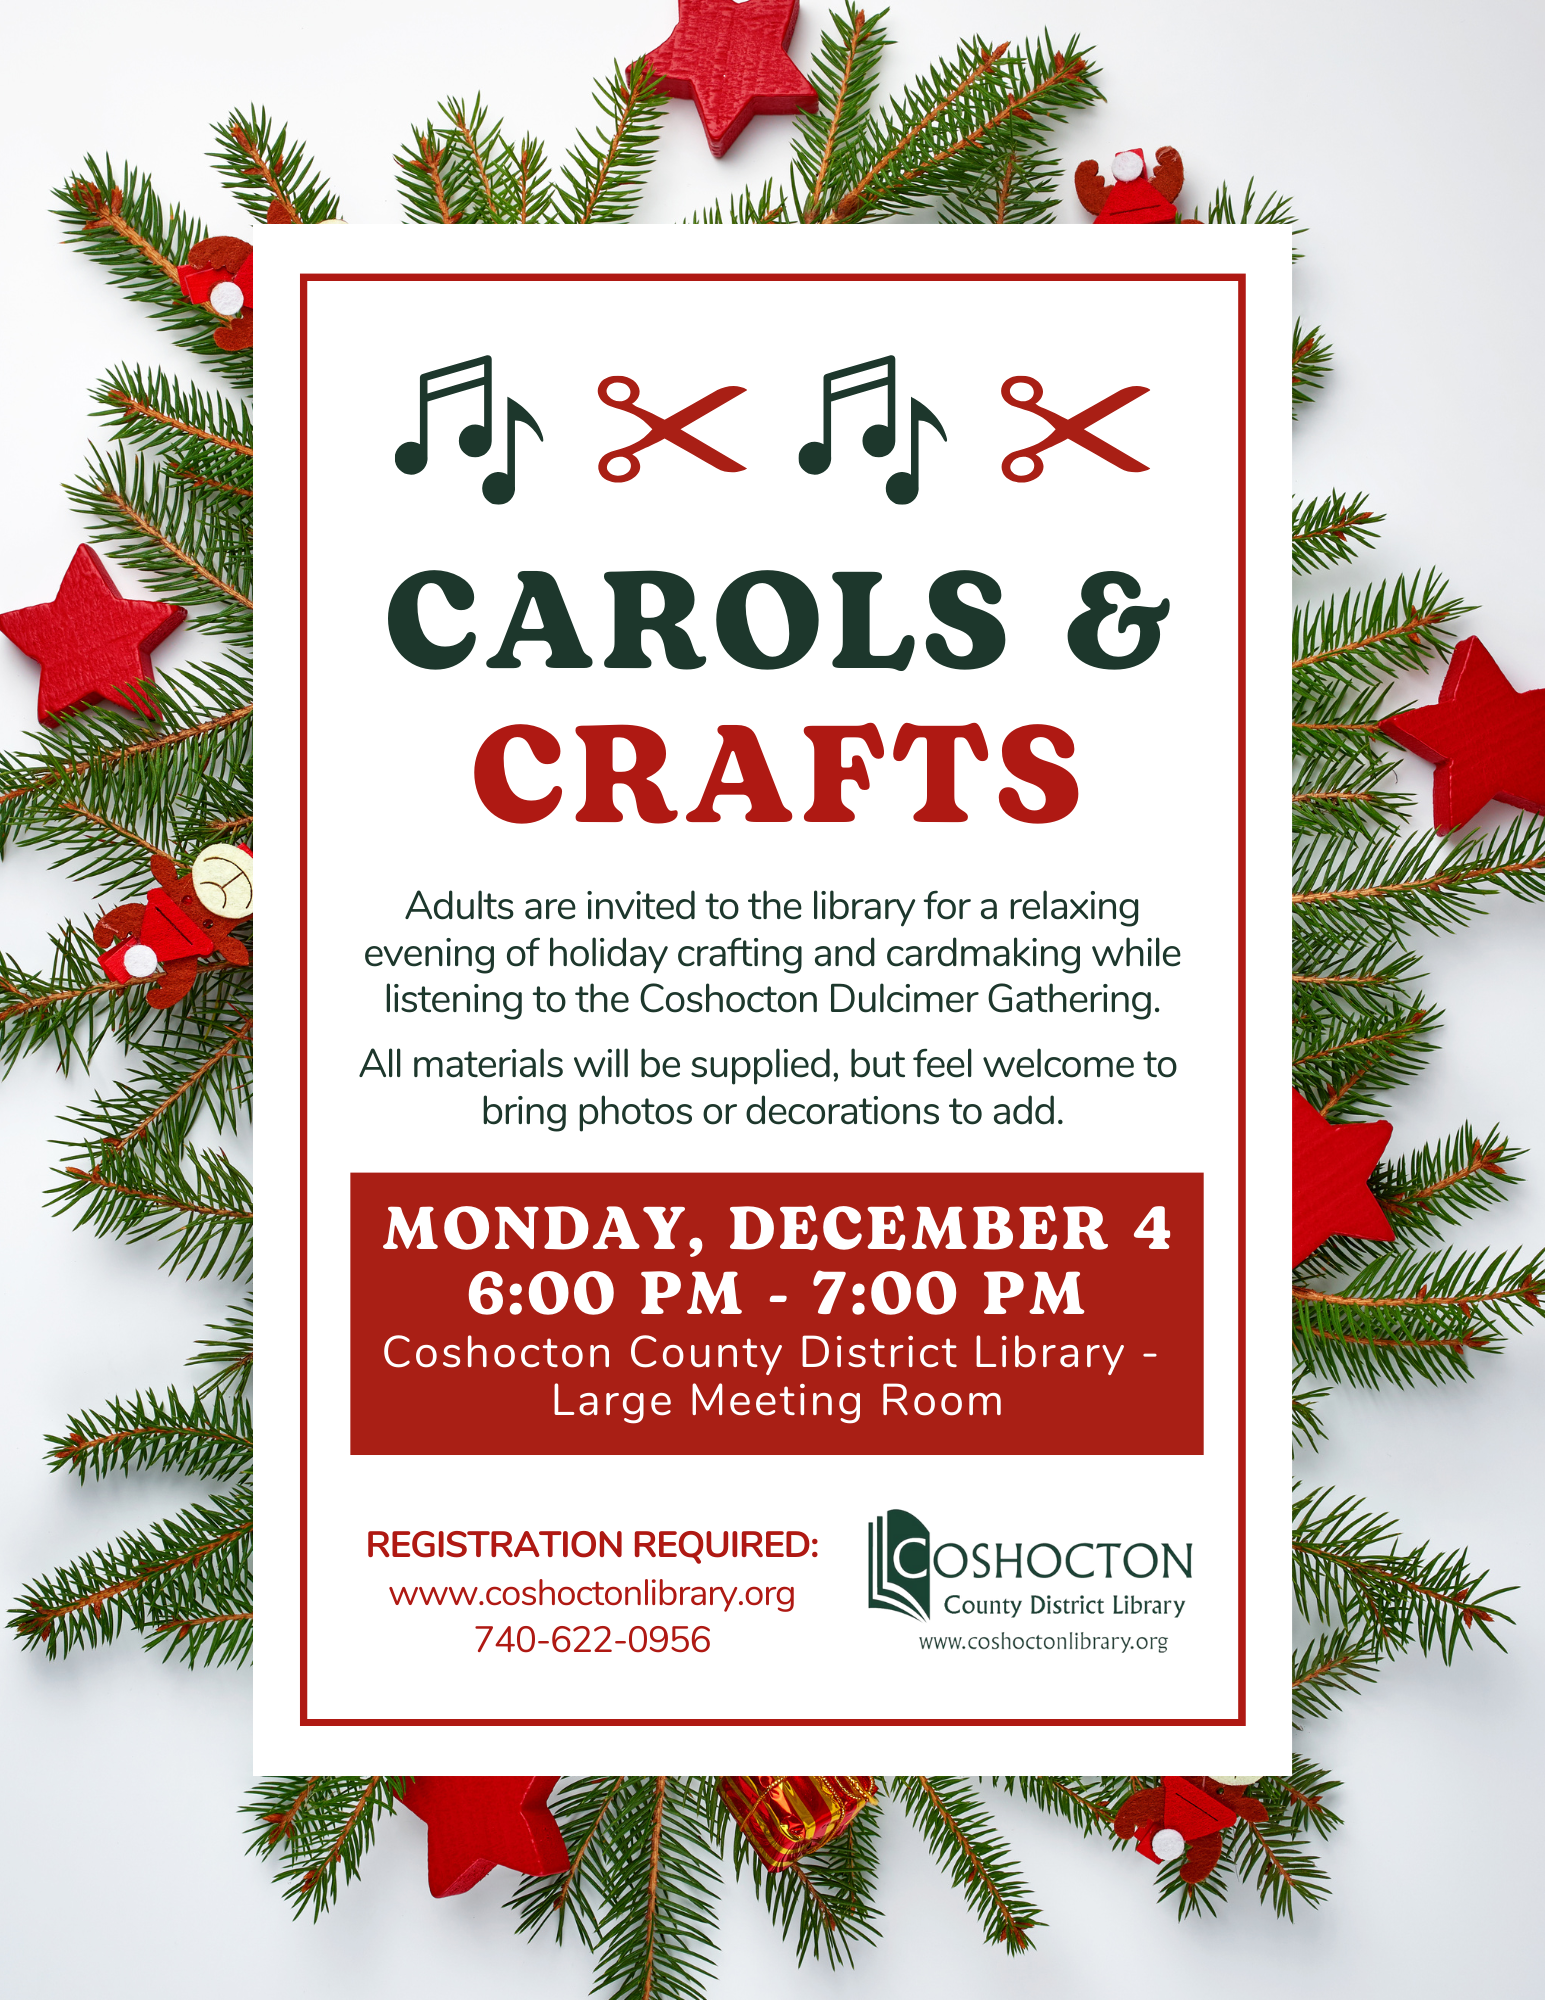 Carols & Crafts program flyer